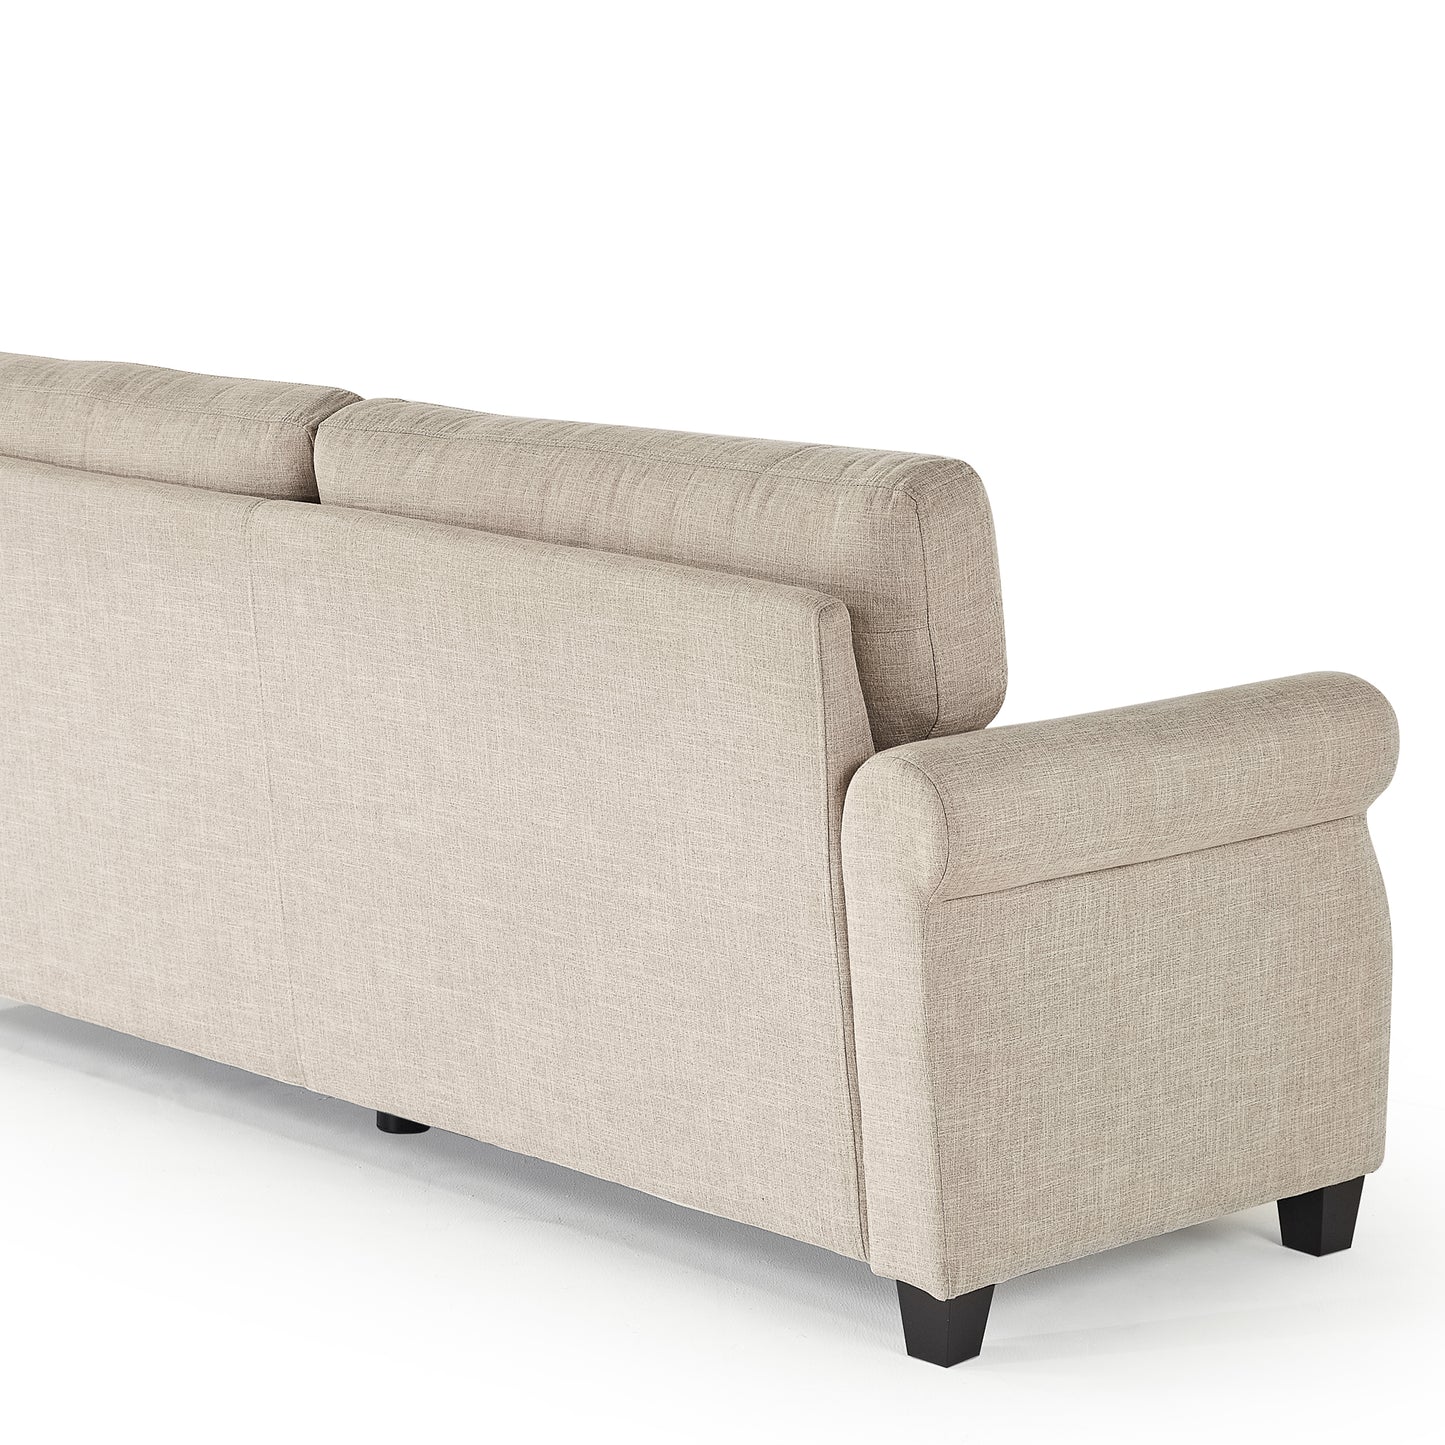 Josh Contemporary Upholstered Sofa - Beige